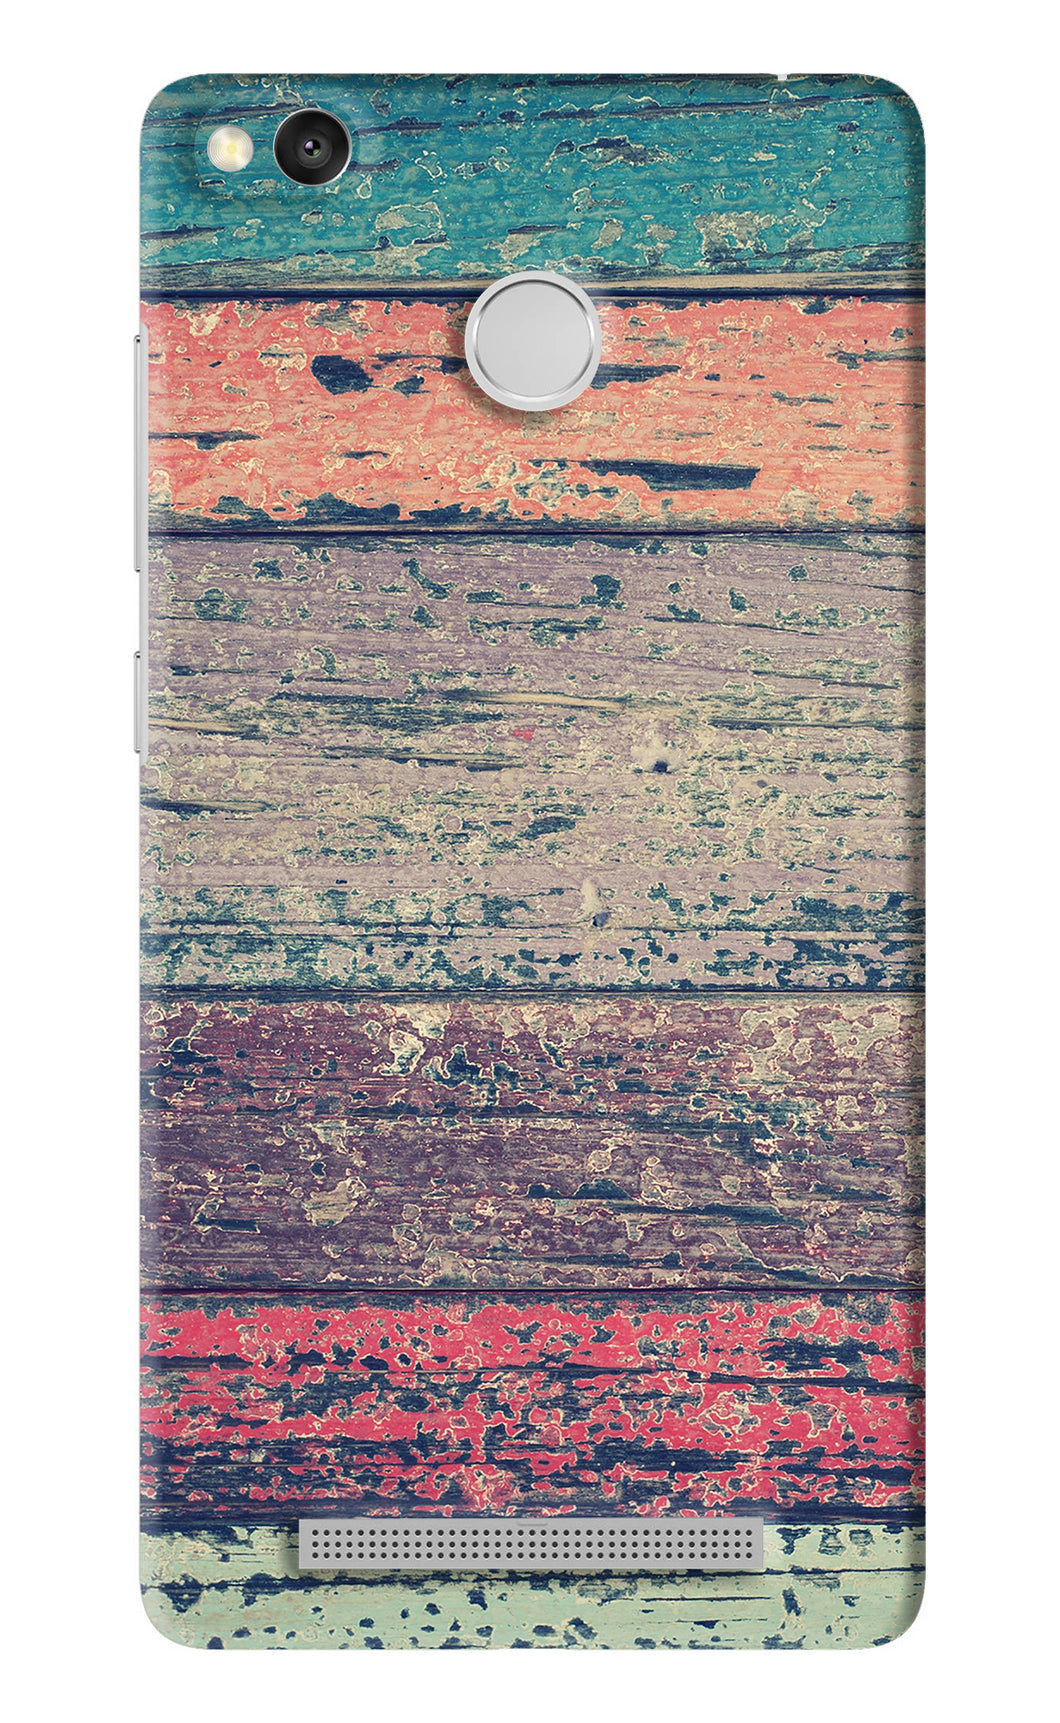 Colourful Wall Xiaomi Redmi 3S Prime Back Skin Wrap